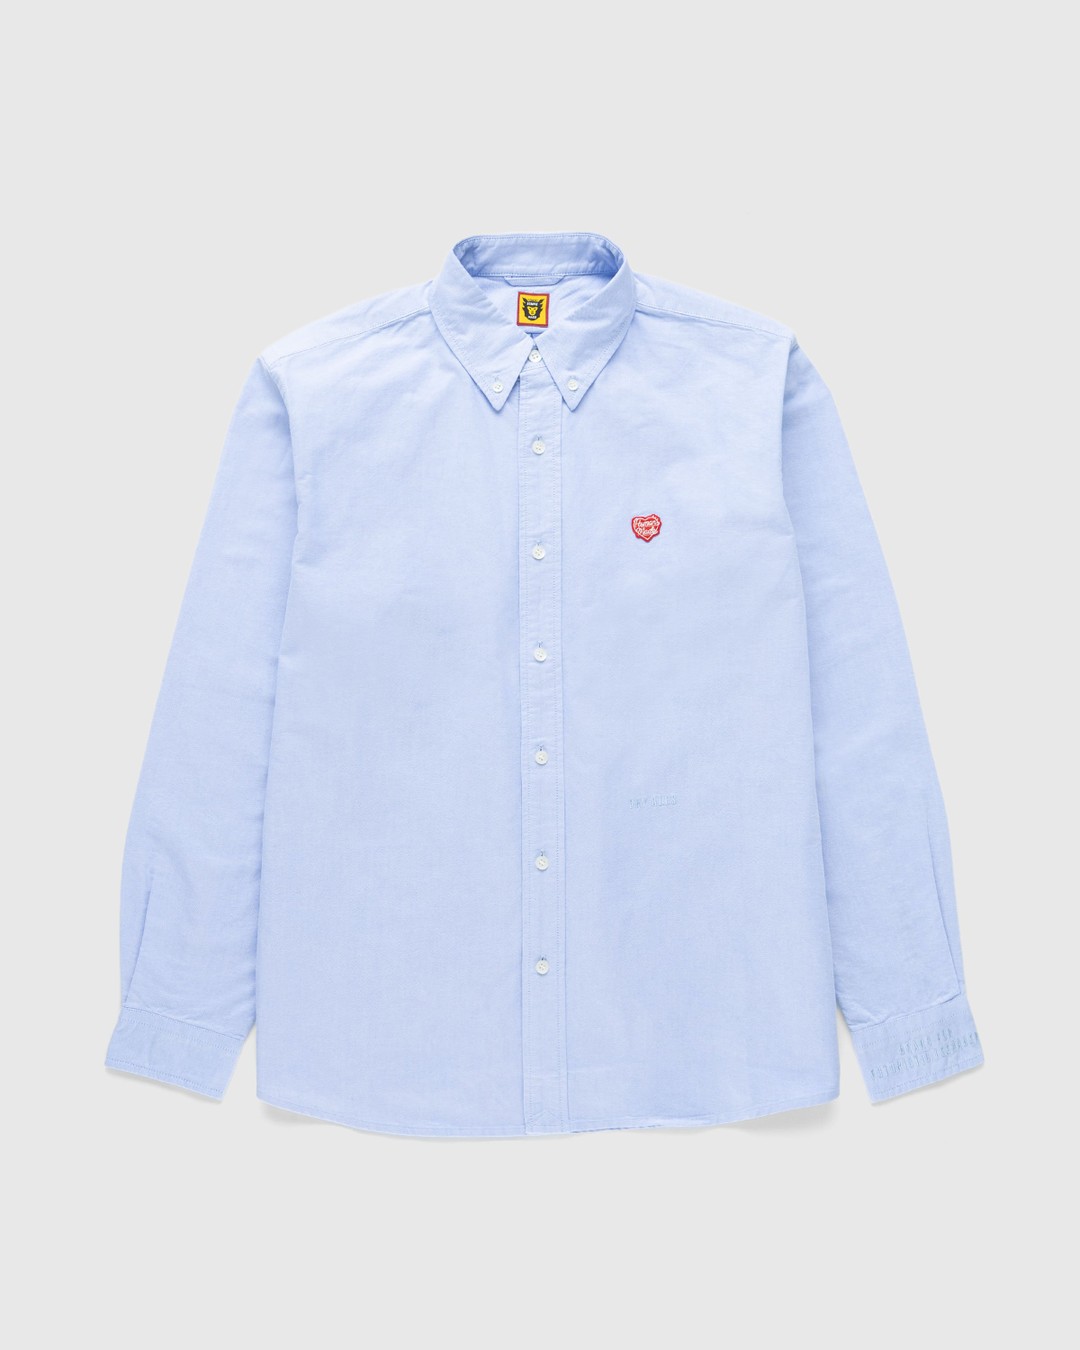 Human Made – Oxford B.D Long-Sleeve Shirt Blue | Highsnobiety Shop